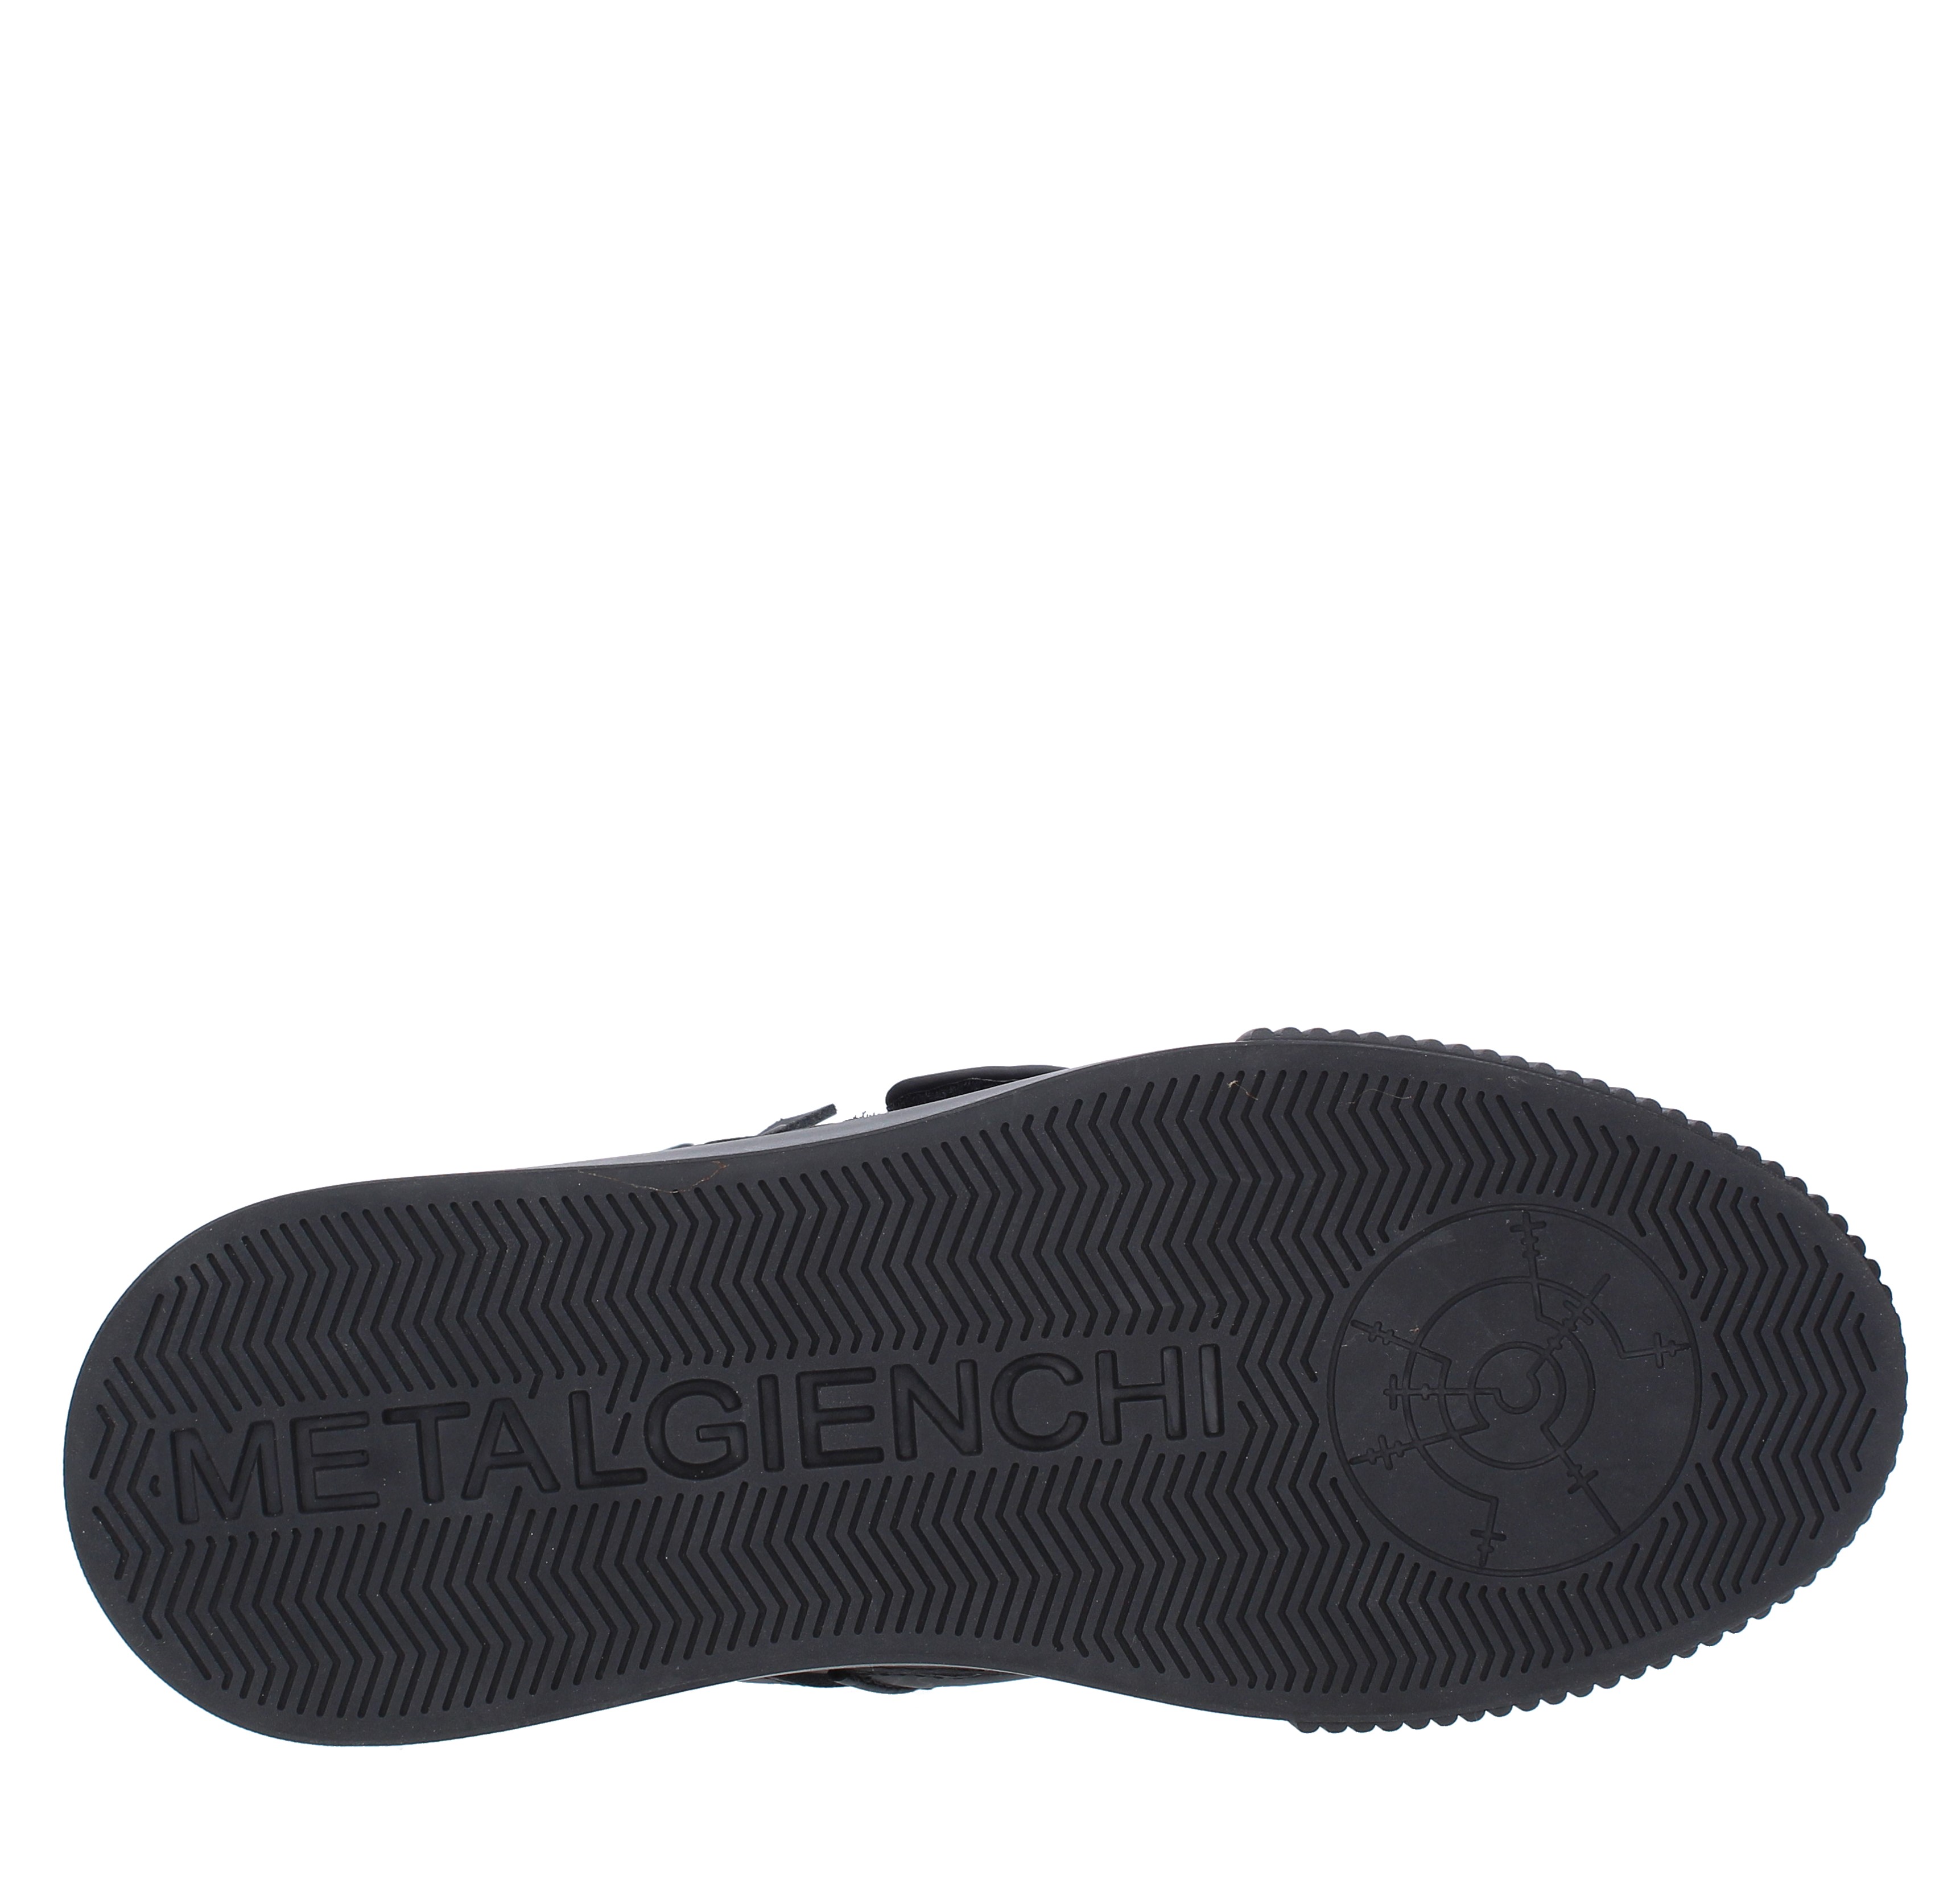 Sneakers in pelle gommata - METALGIENCHI - Ginevra calzature